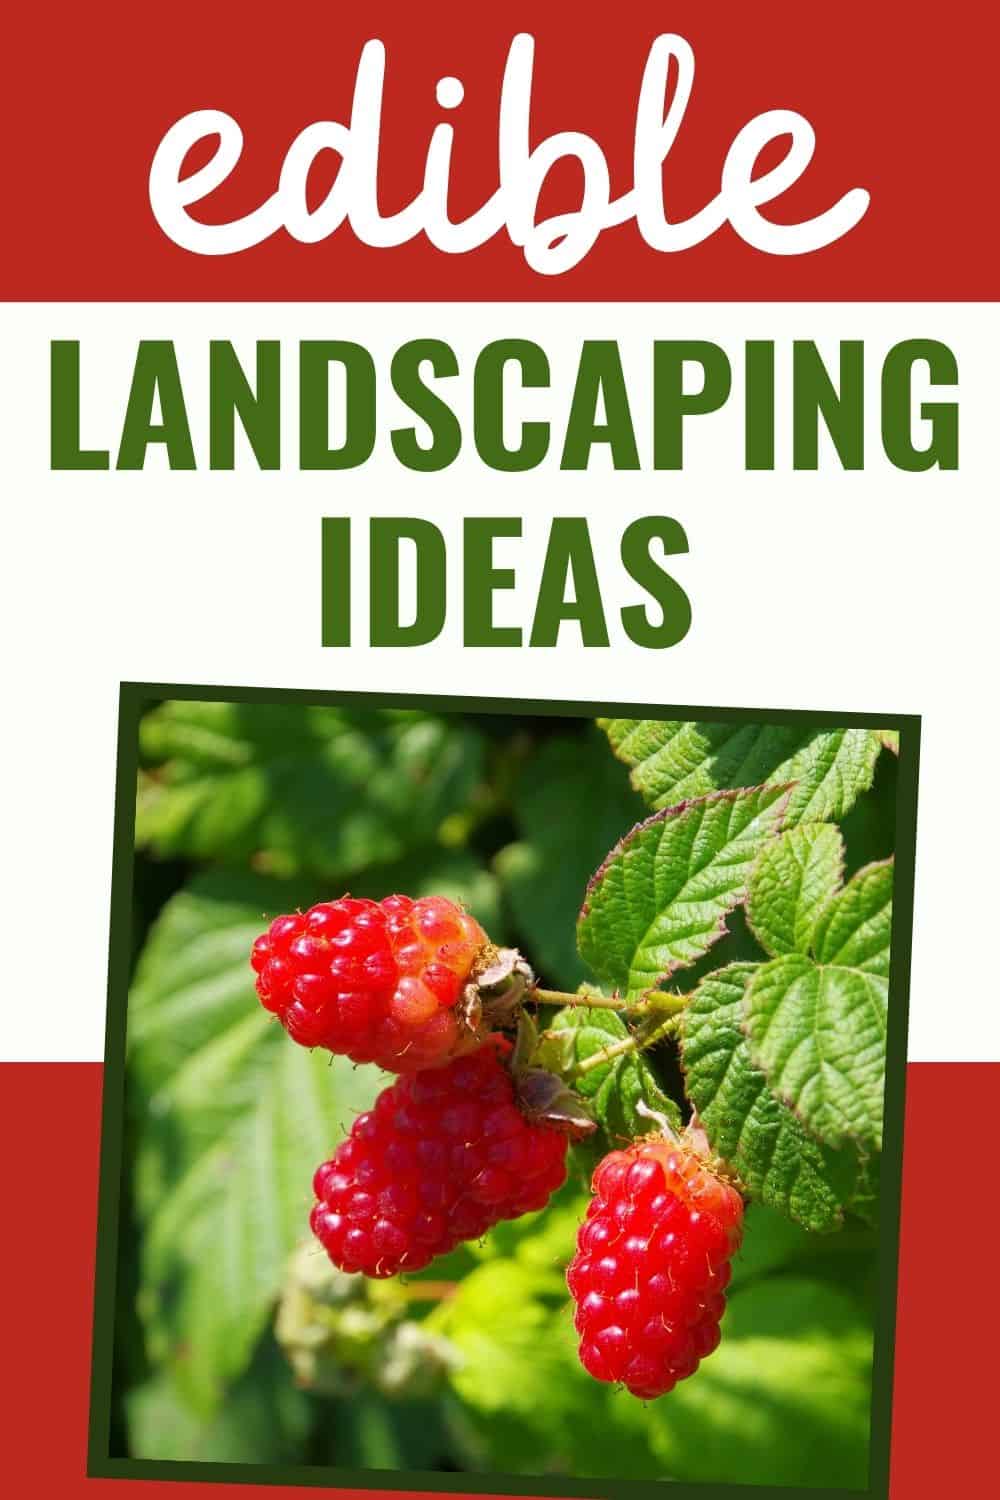 Edible landscaping ideas